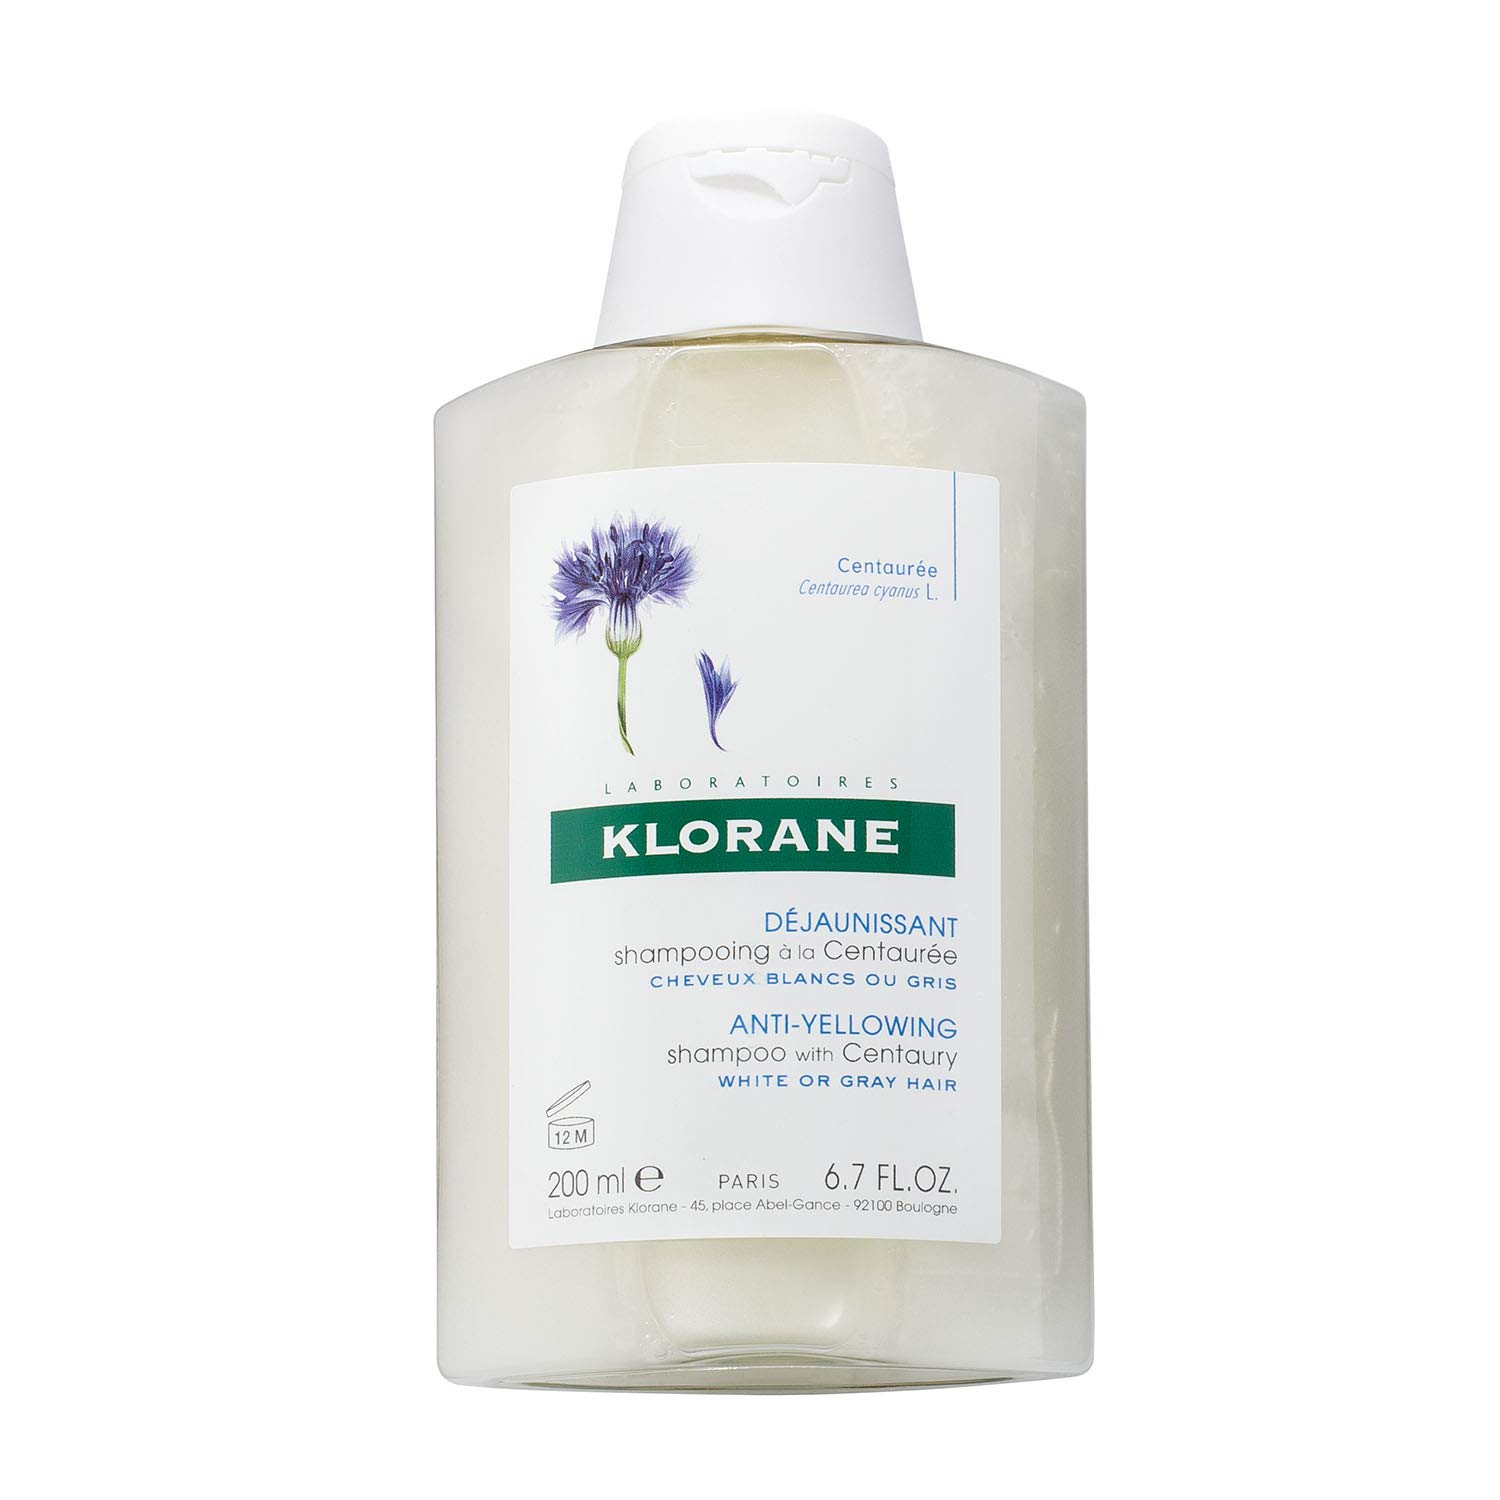 colour depositing shampoo for grey hair - Klorane Anti-Yellowing Shampoo With Centaury